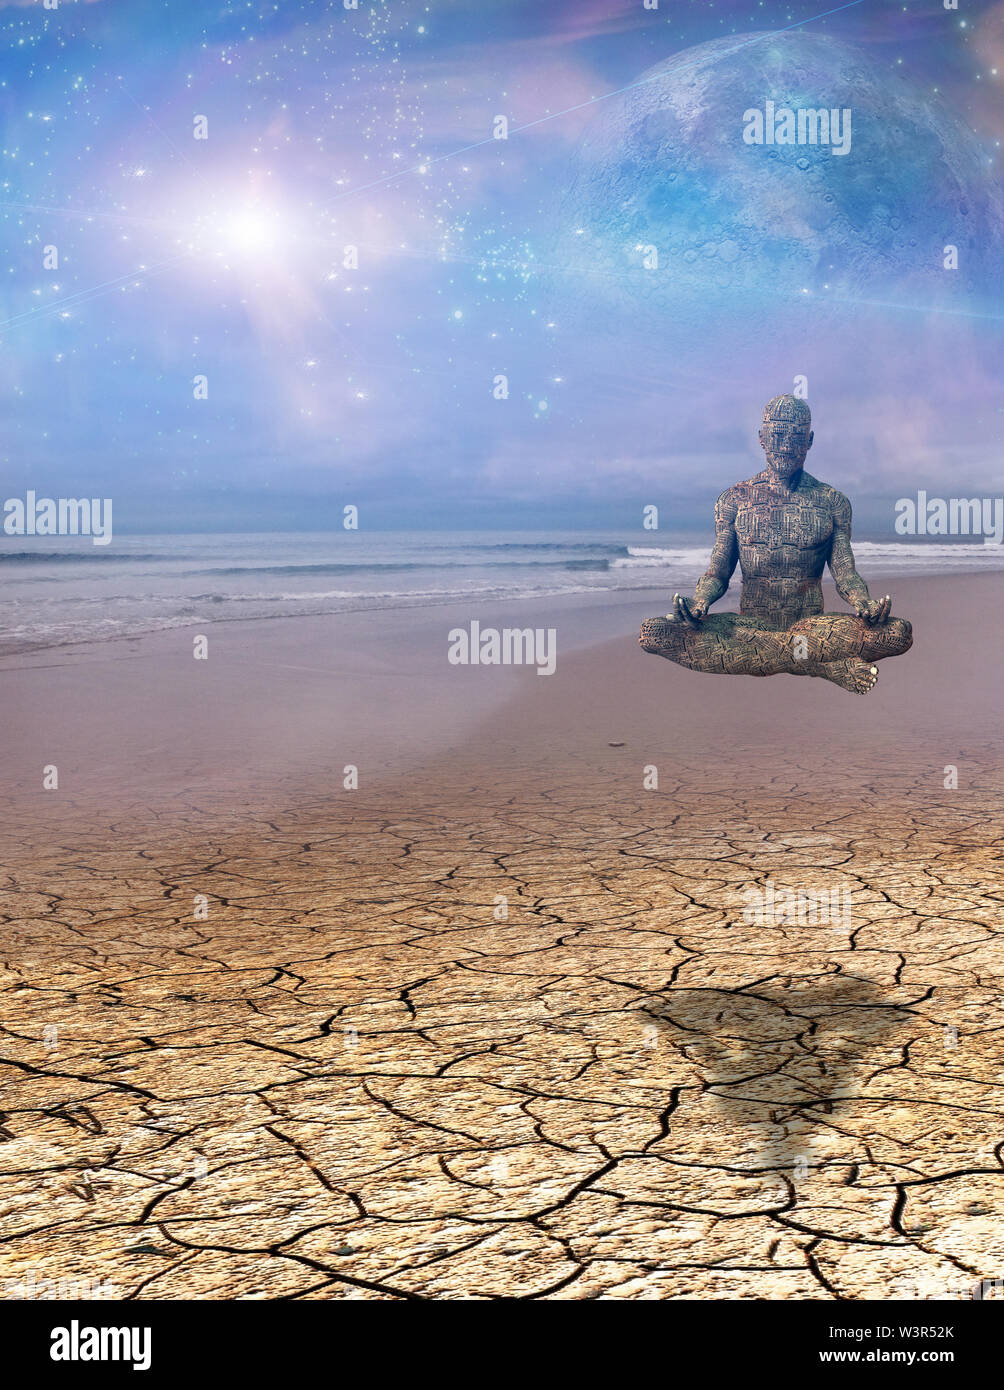 Cyborg meditate on a ocean shore Stock Photo